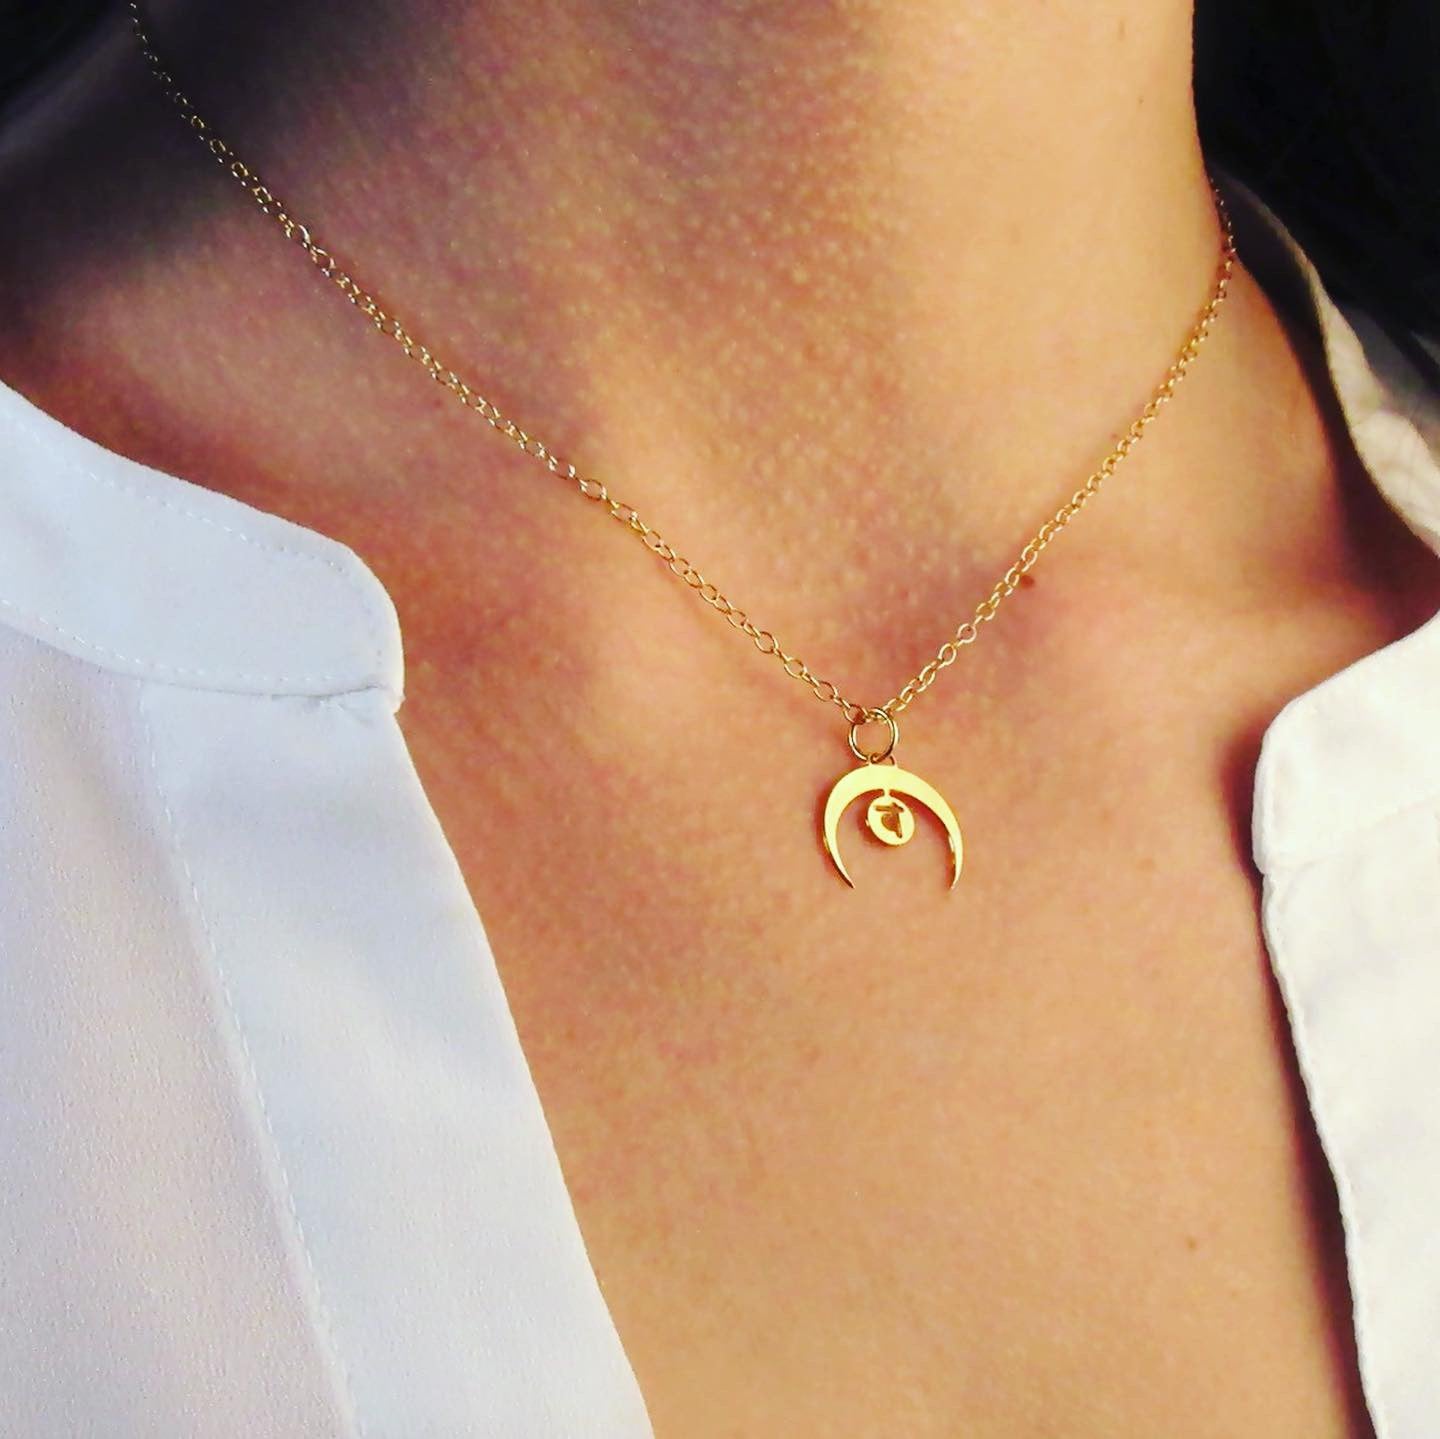 Sacral Chakra Moon Necklace | The Sacral Chakra represents sensuality